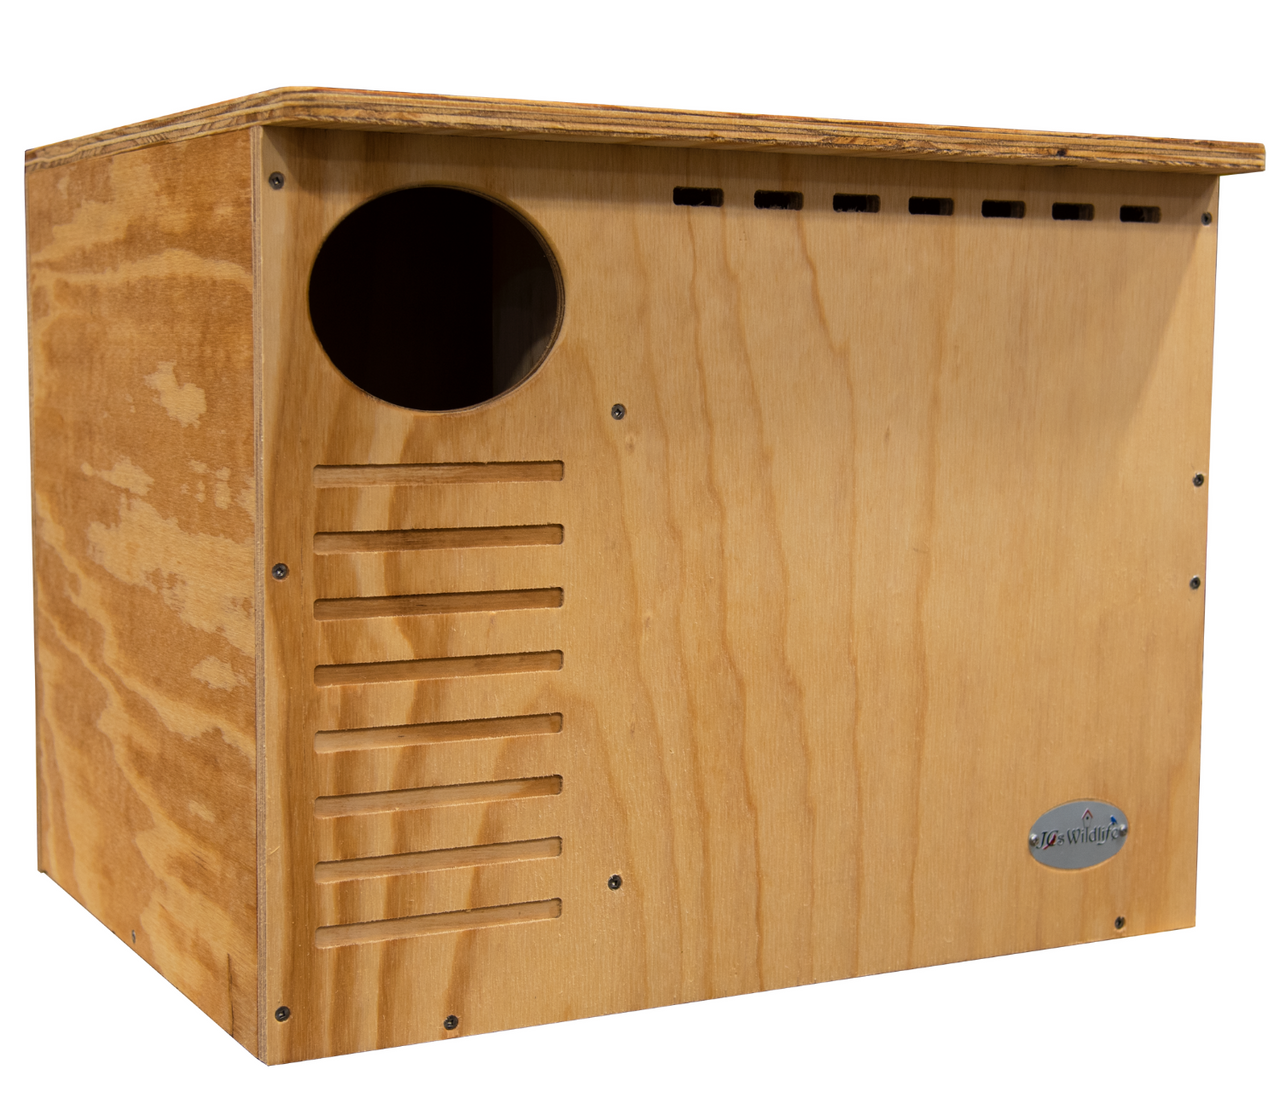 JCS Wildlife Barn Owl Nesting Box: Do It Yourself Assembly Kit